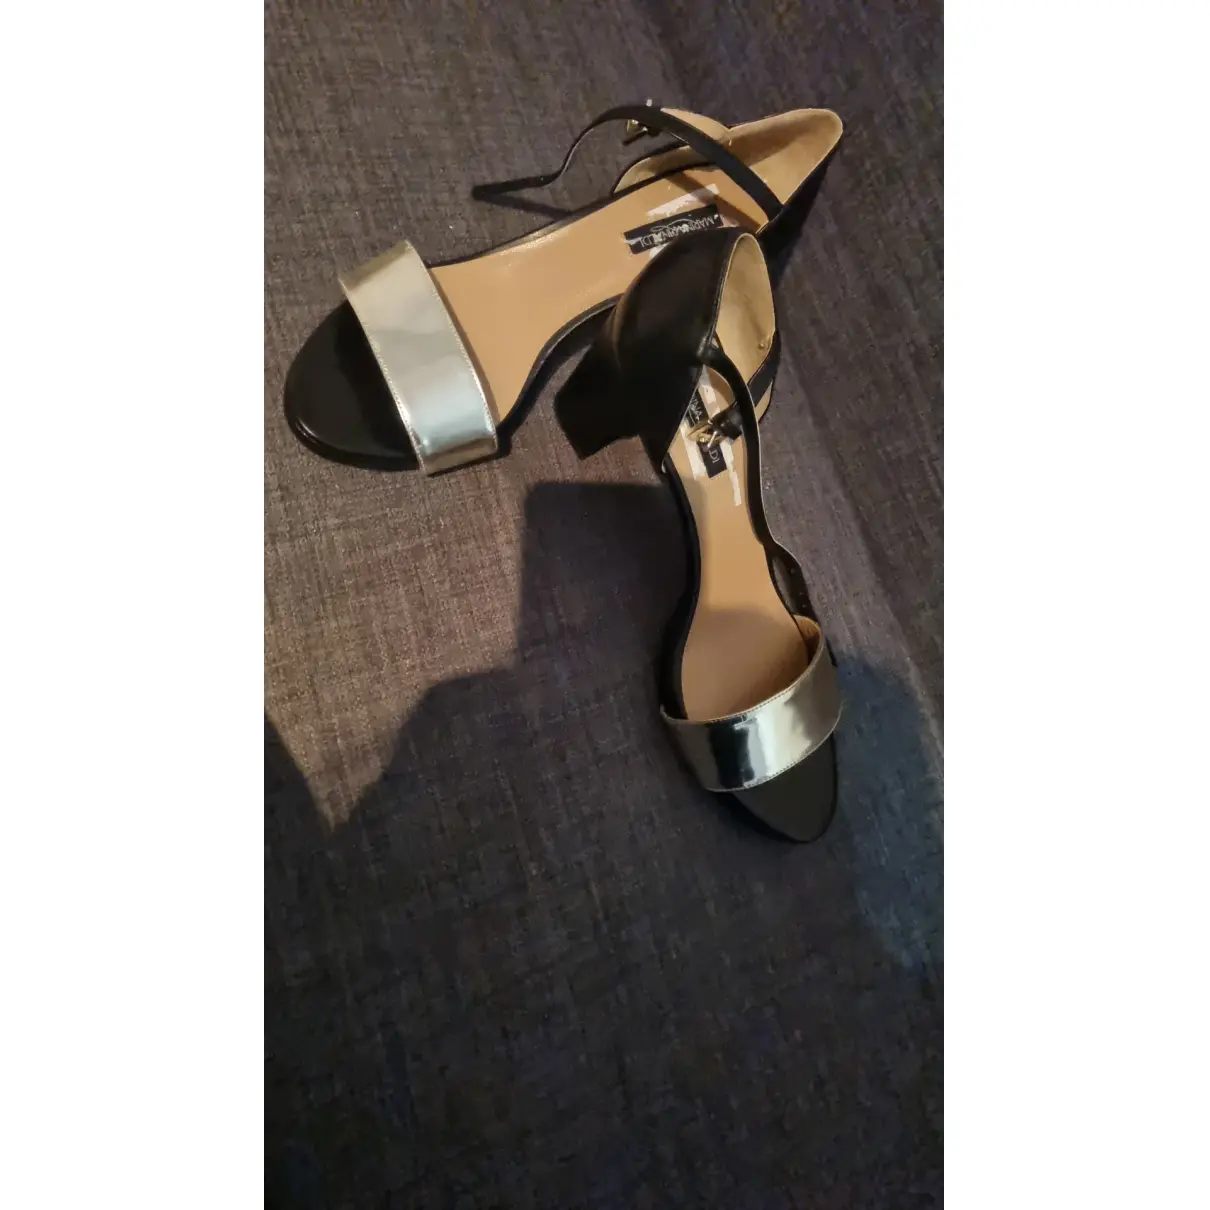 Buy MARINA RINALDI Leather sandals online